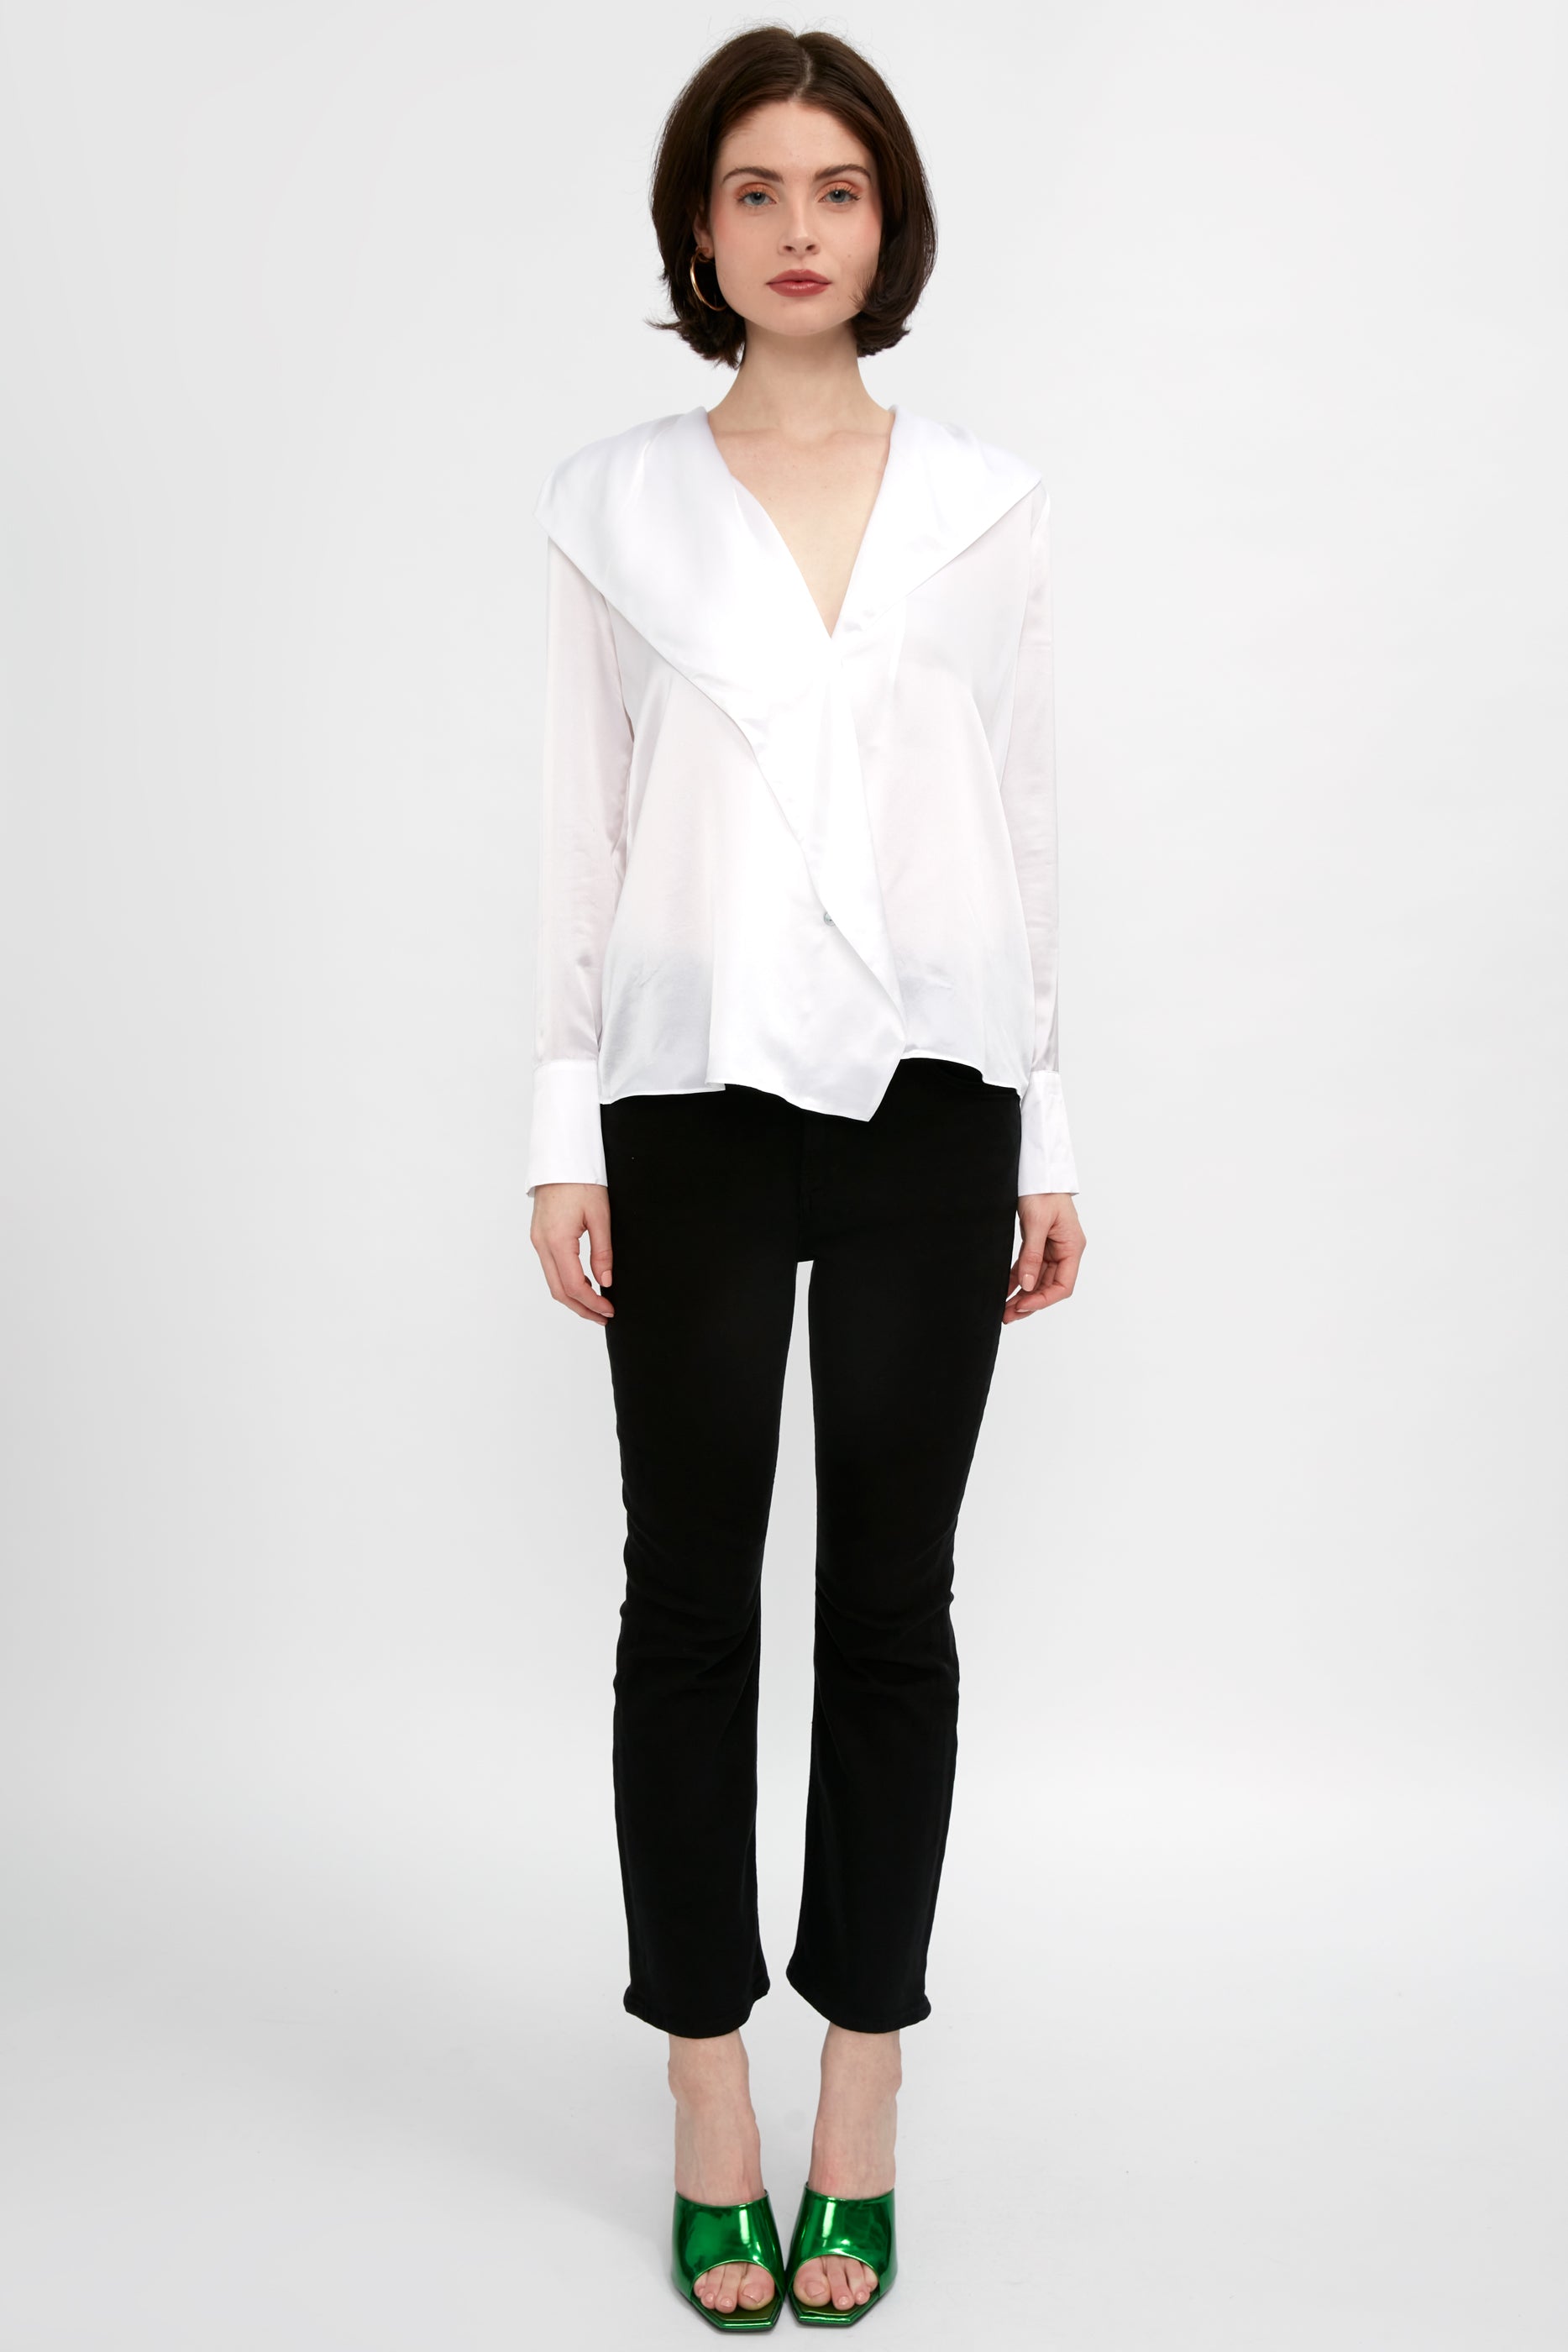 L'AGENCE Jaslynn Silk Open Collar Blouse in White